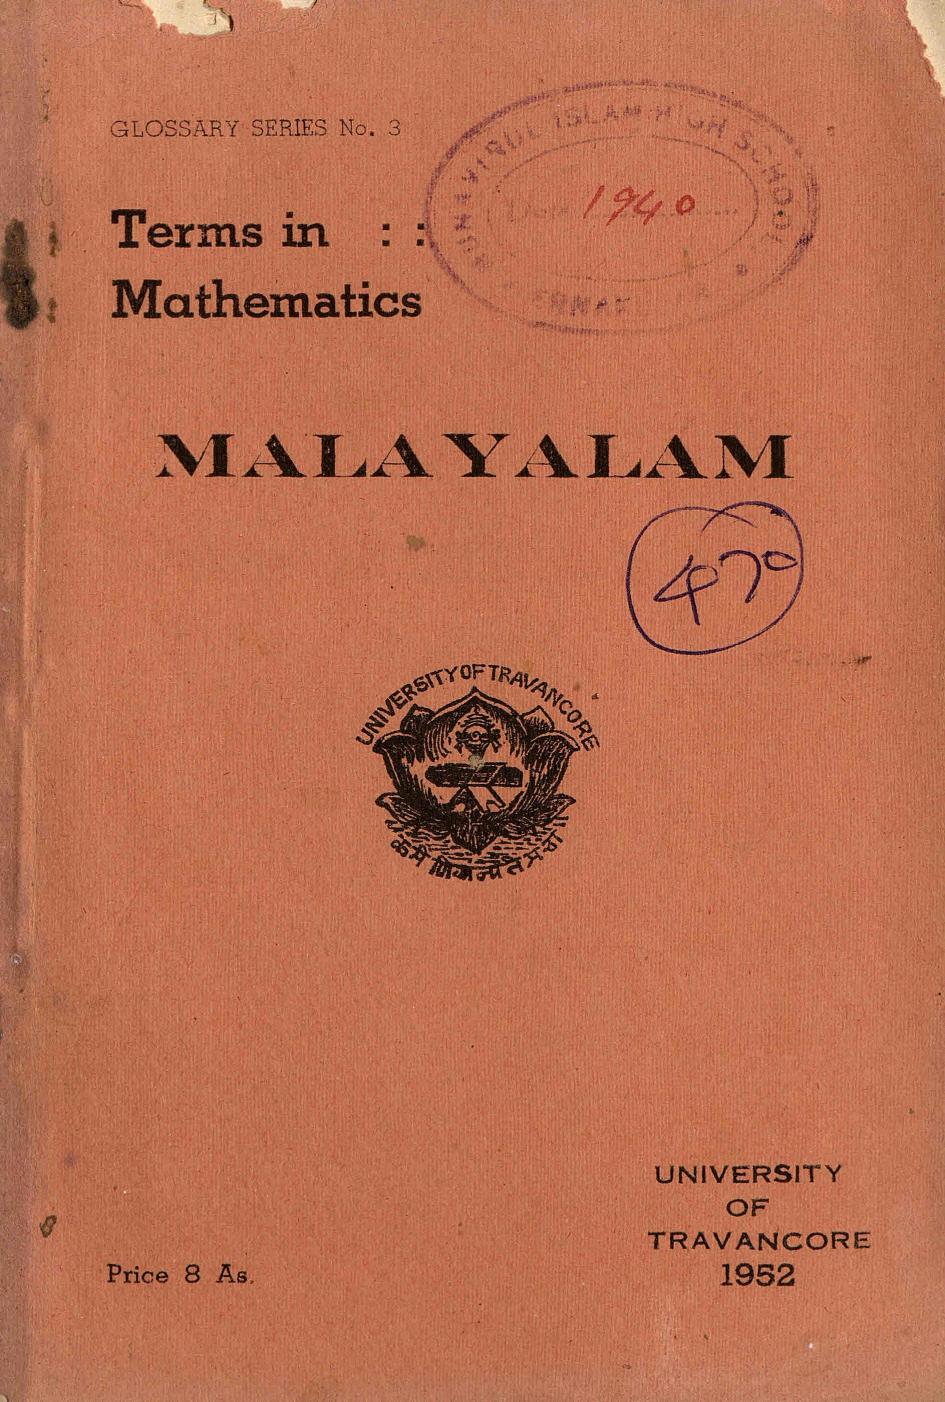 1952 - Terms in Mathematics - Malayalam